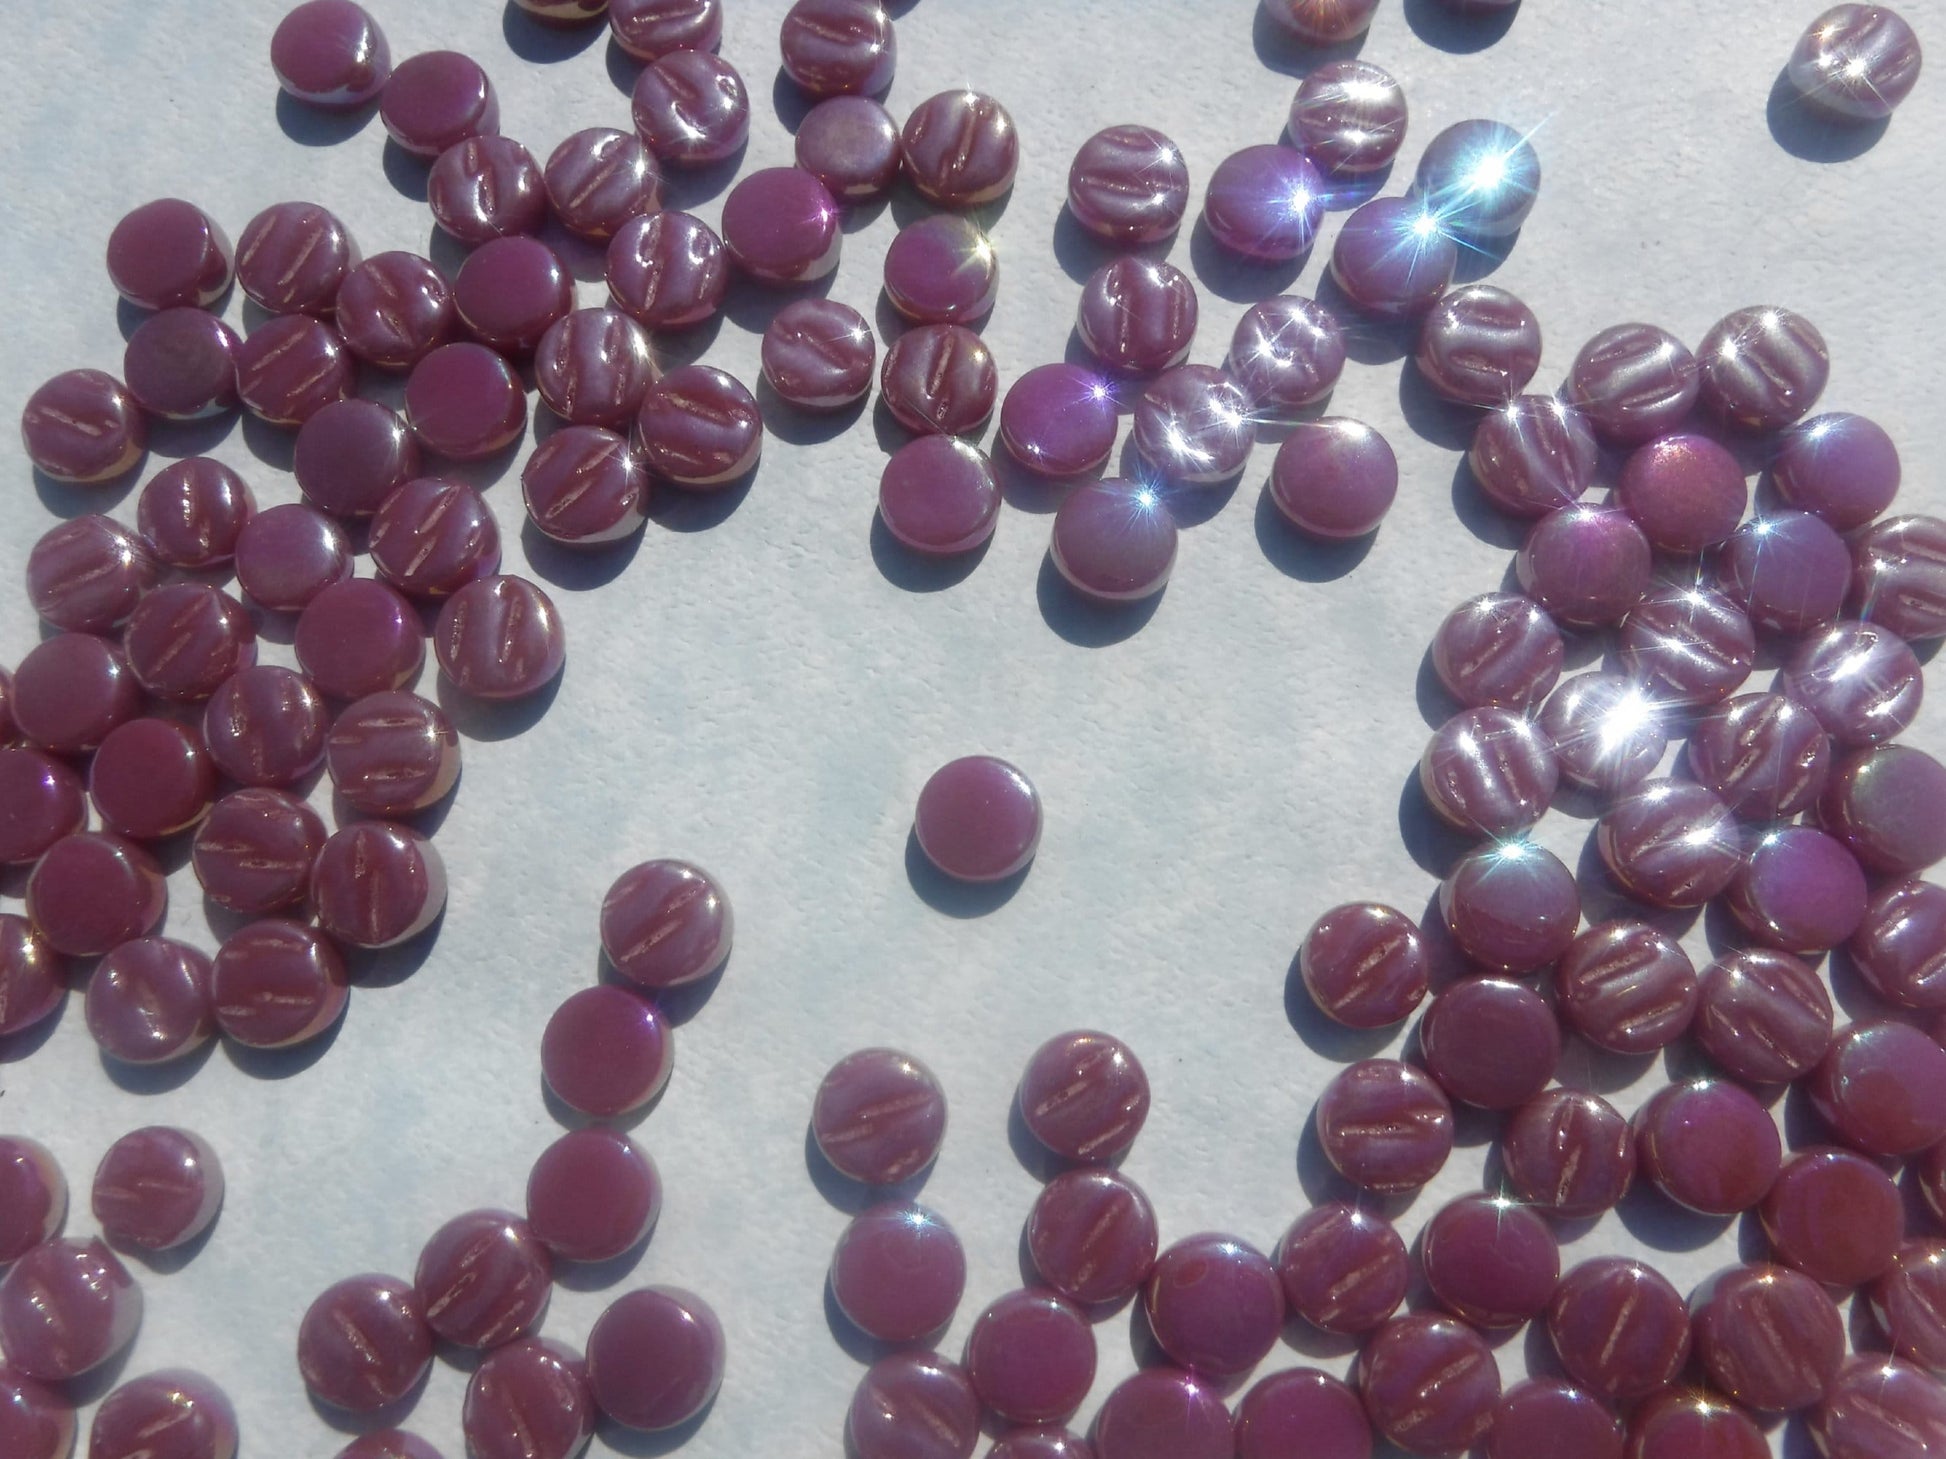 Raspberry Pink MINI Iridescent Glass Drops Mosaic Tiles - 50 grams - Over 100 Tiles